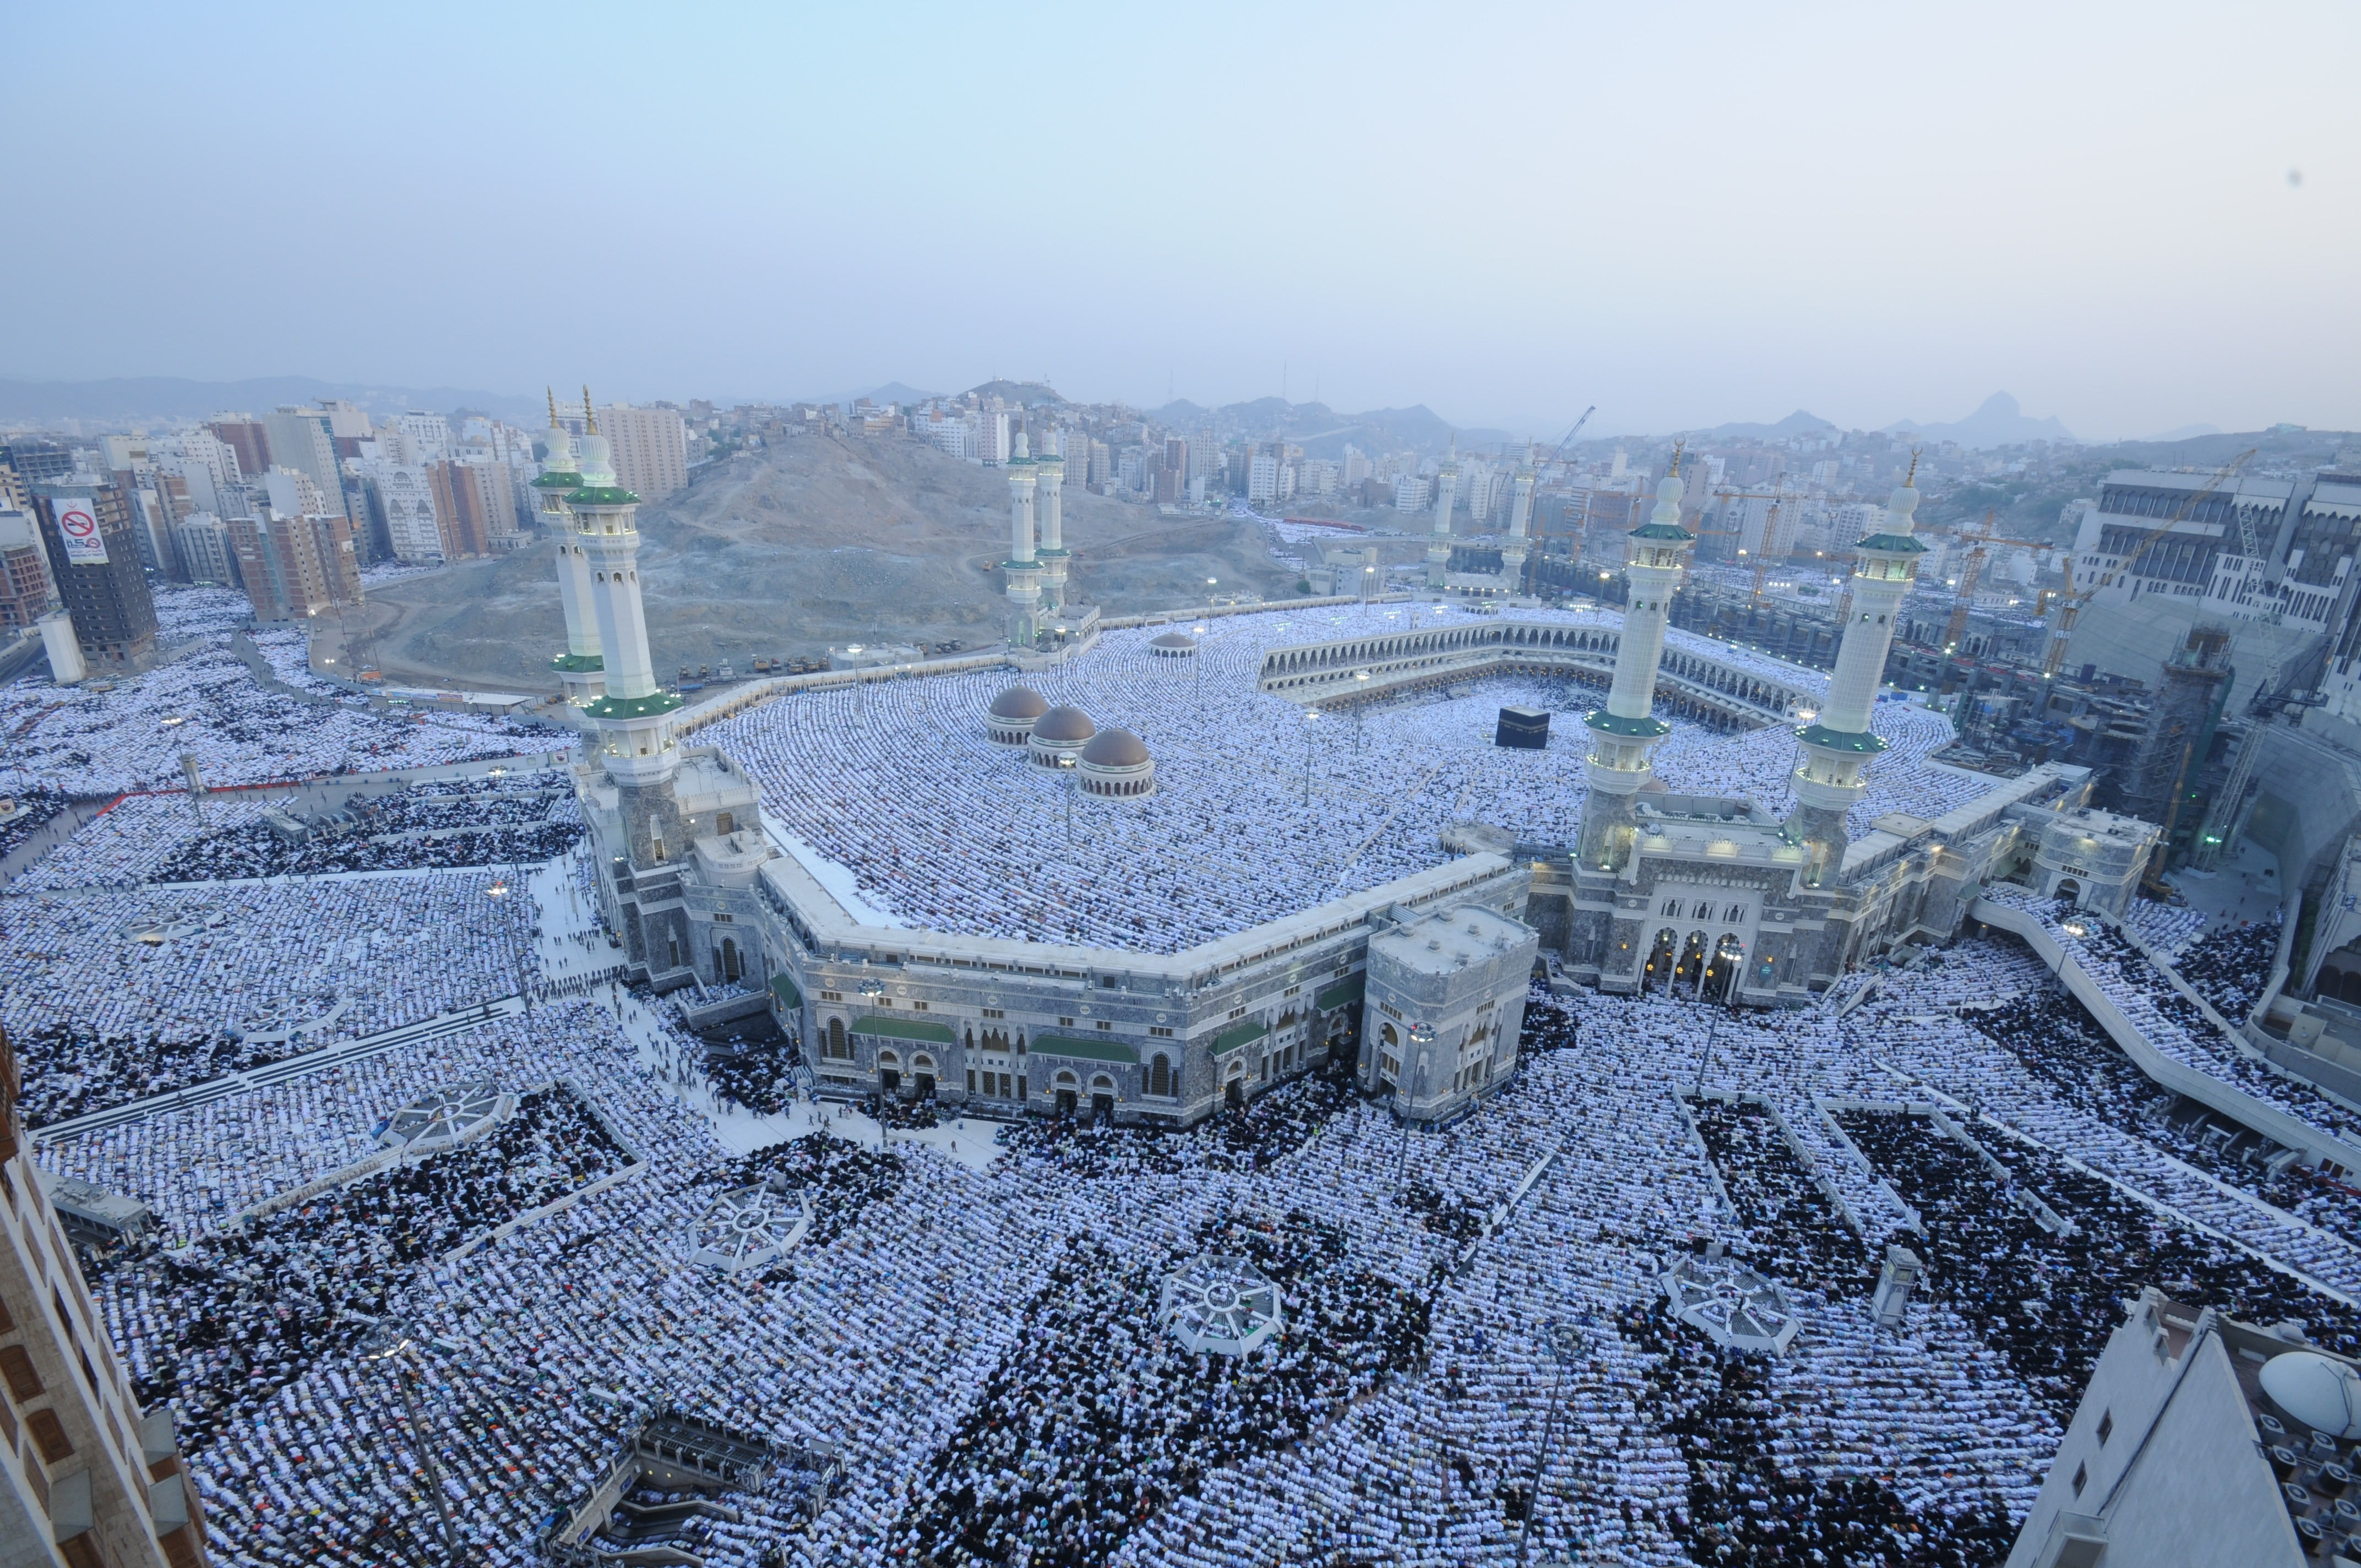 Kaaba Mecca, Islam, Muslim, praying, Saudi Arabia, architecture